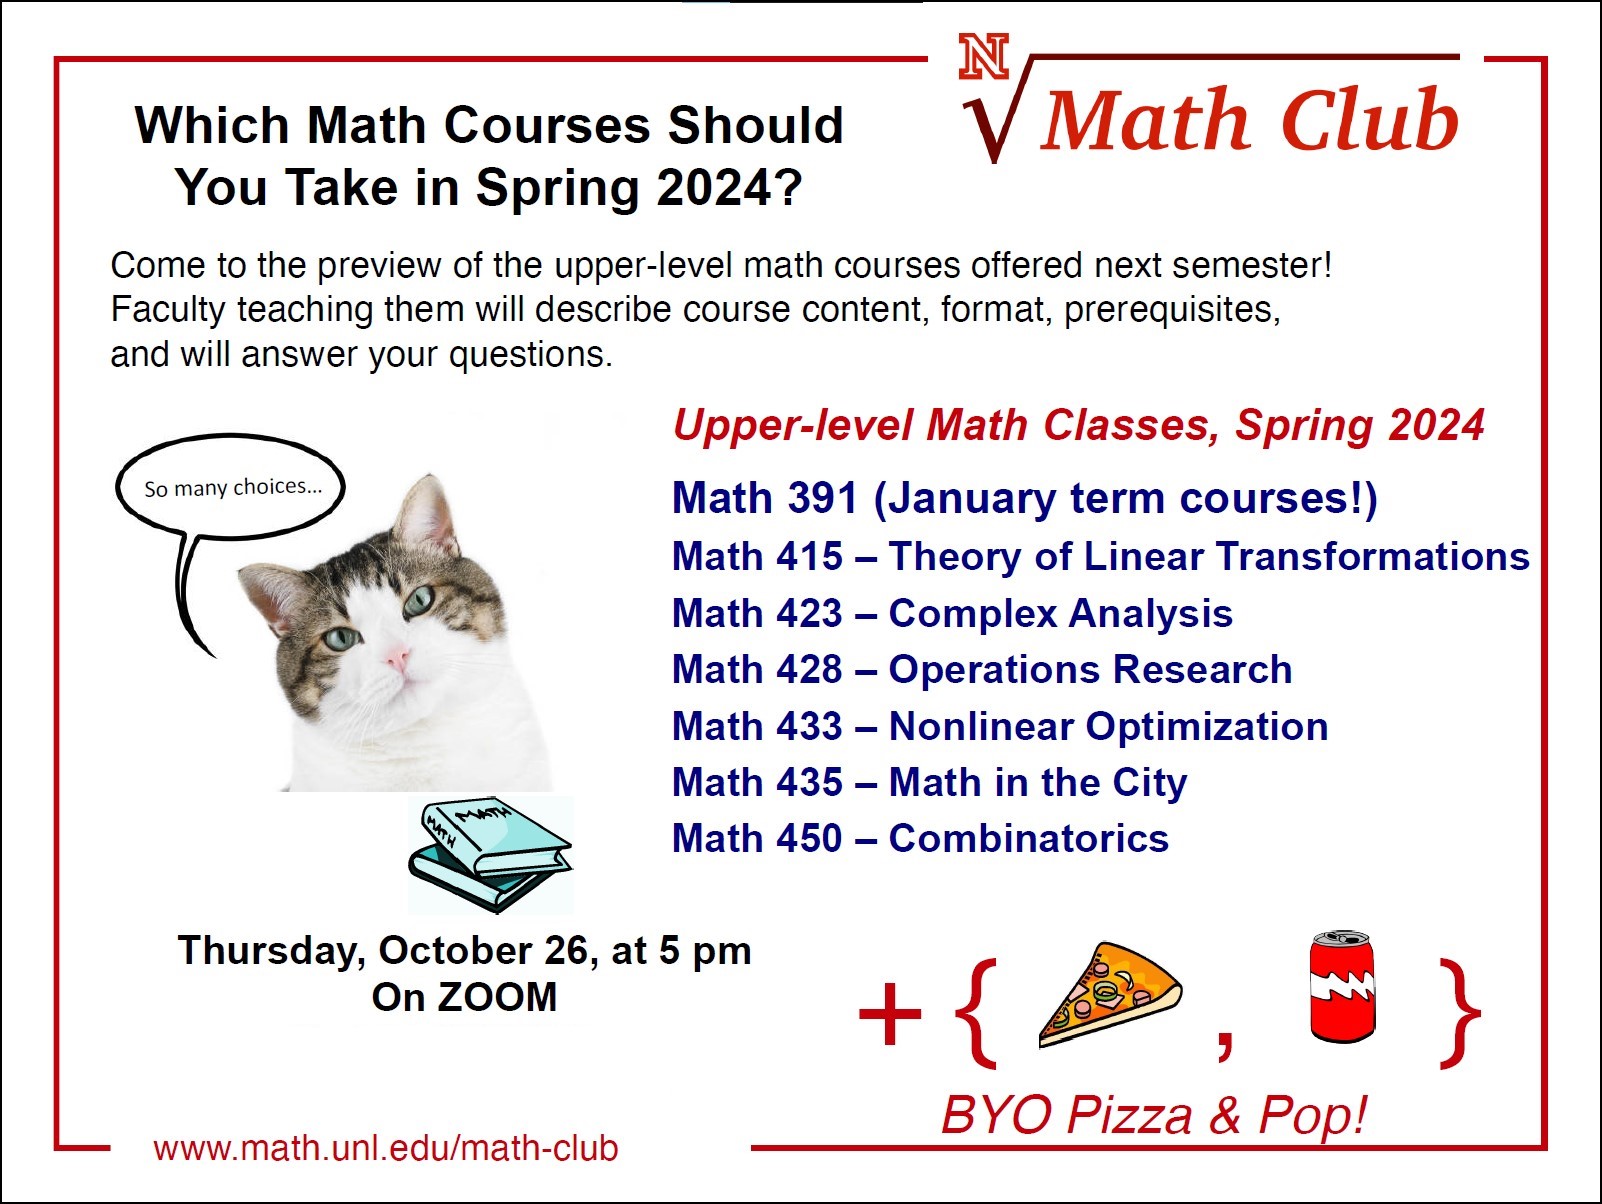 Math Club: Spring 2024 Math Course Preview Event